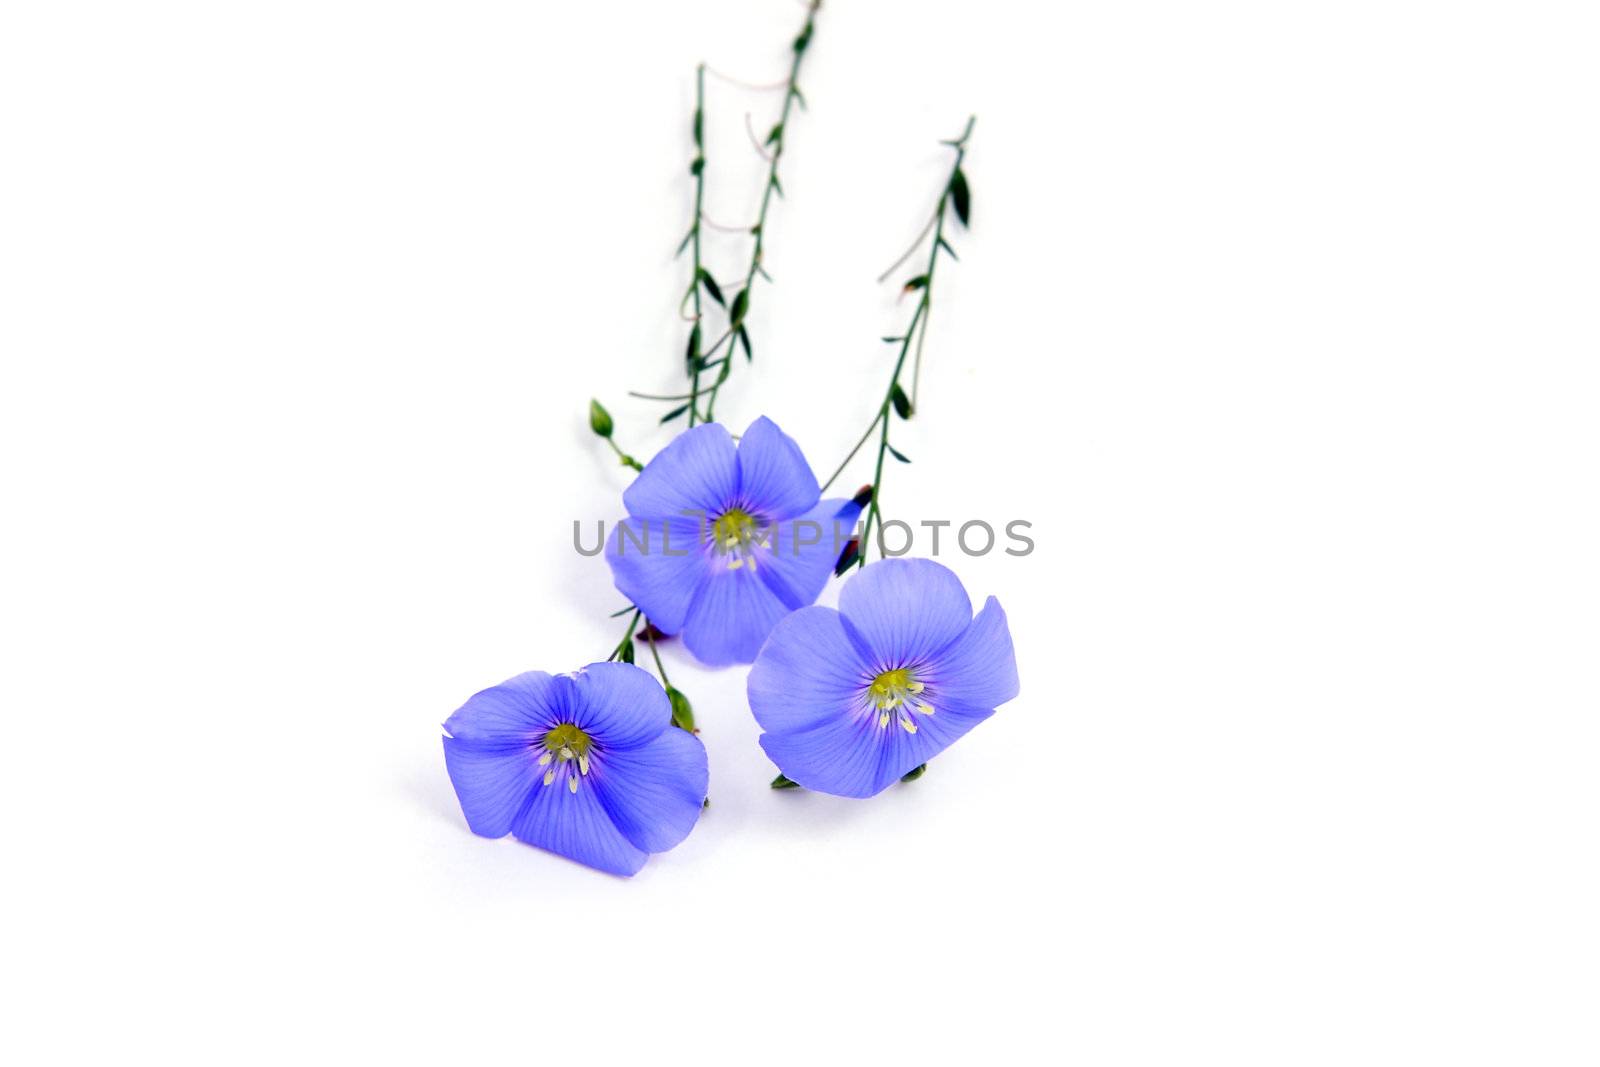  Linum usitatissimum  beautiful blue flowers  on white